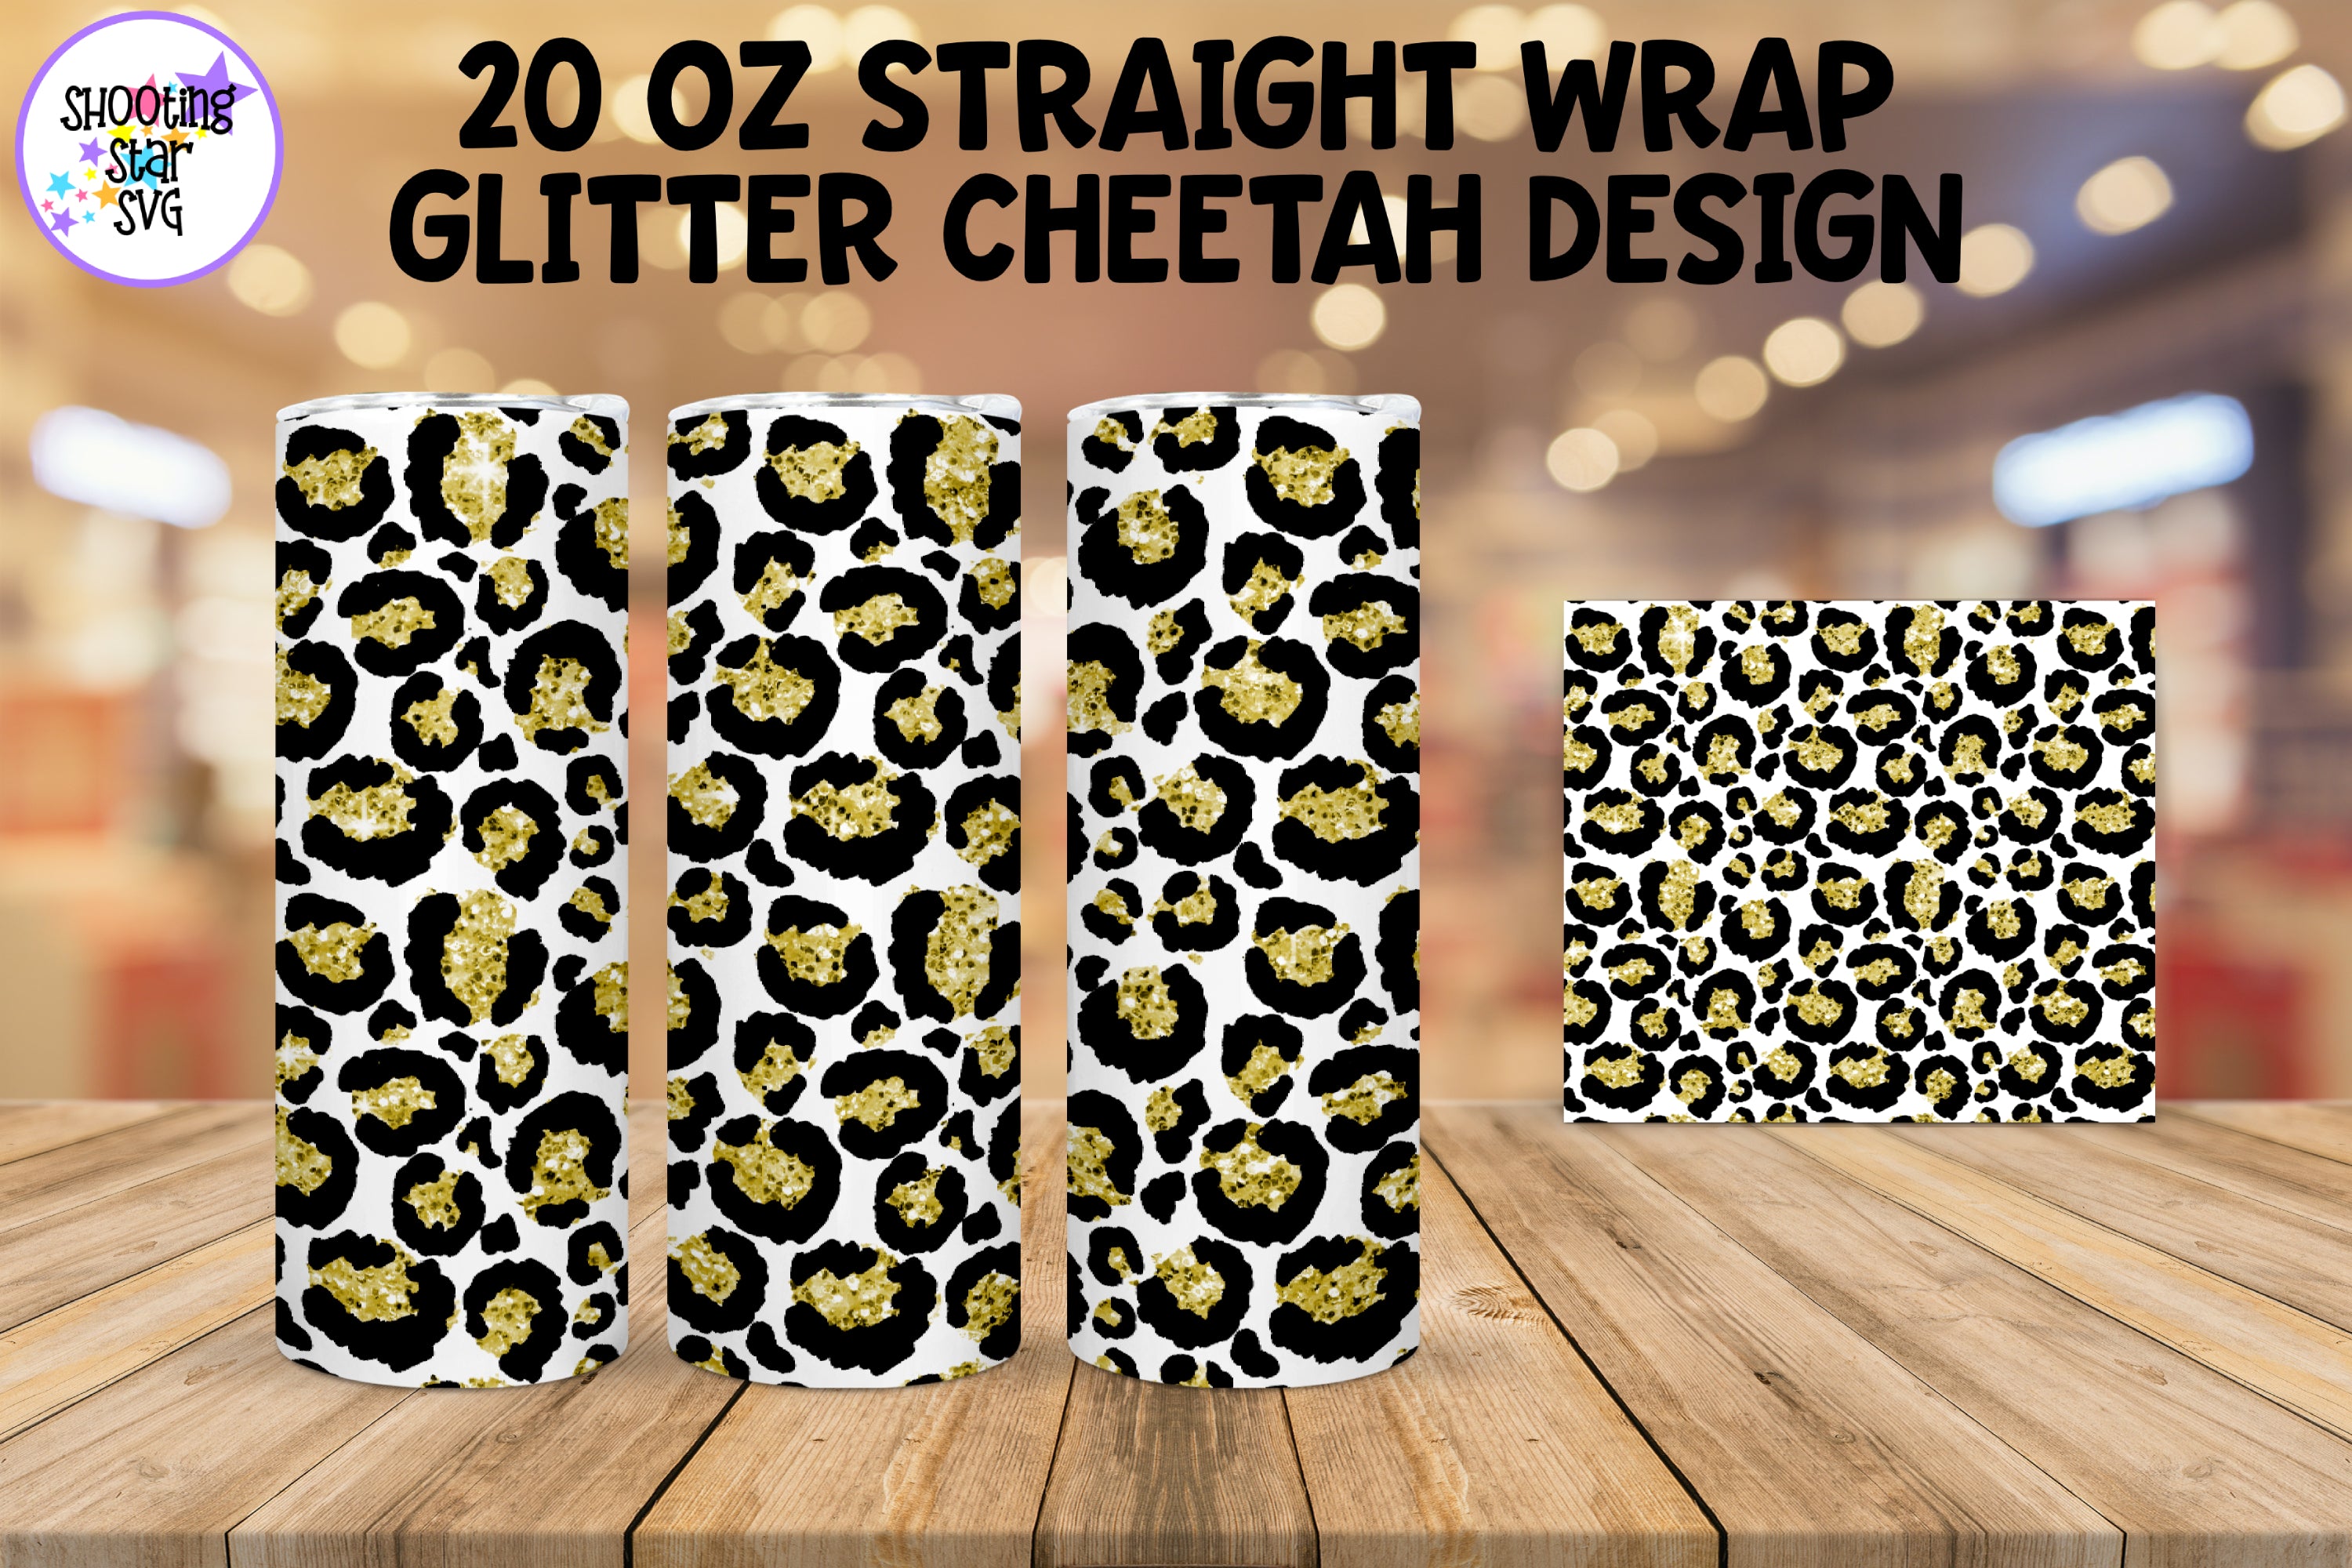 20 OZ Cheetah Tumbler Wrap with Glitter